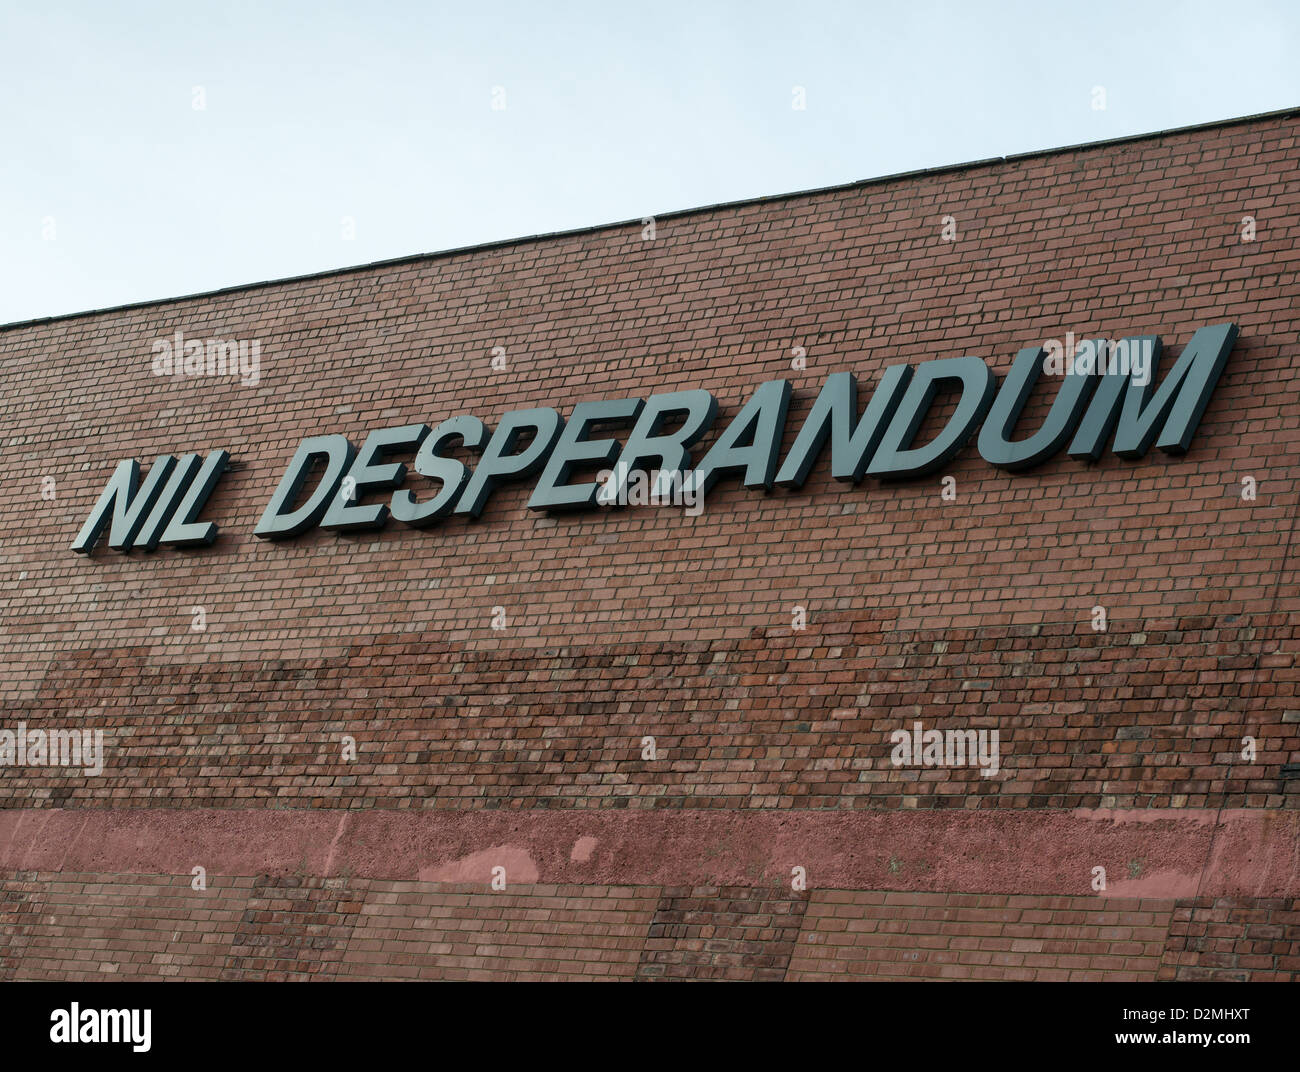 Nil Desperandum appearing on the side of a brick built building Sunderland, north east England UK Stock Photo